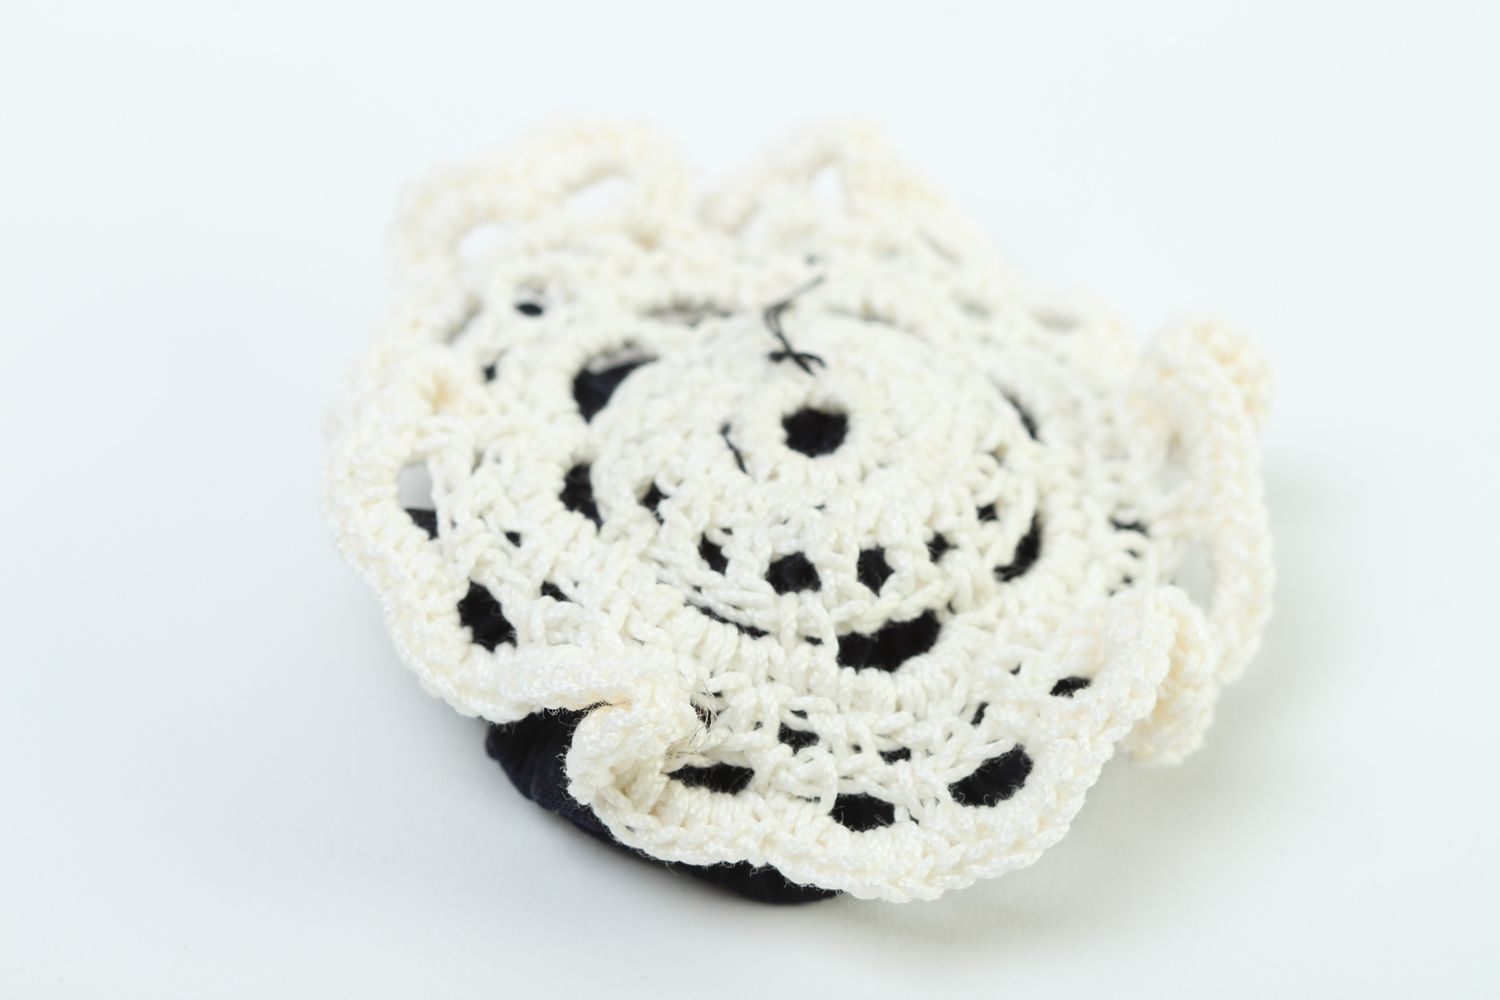 Handmade crochet flower decorative flowers jewelry craft supplies crochet ideas photo 4